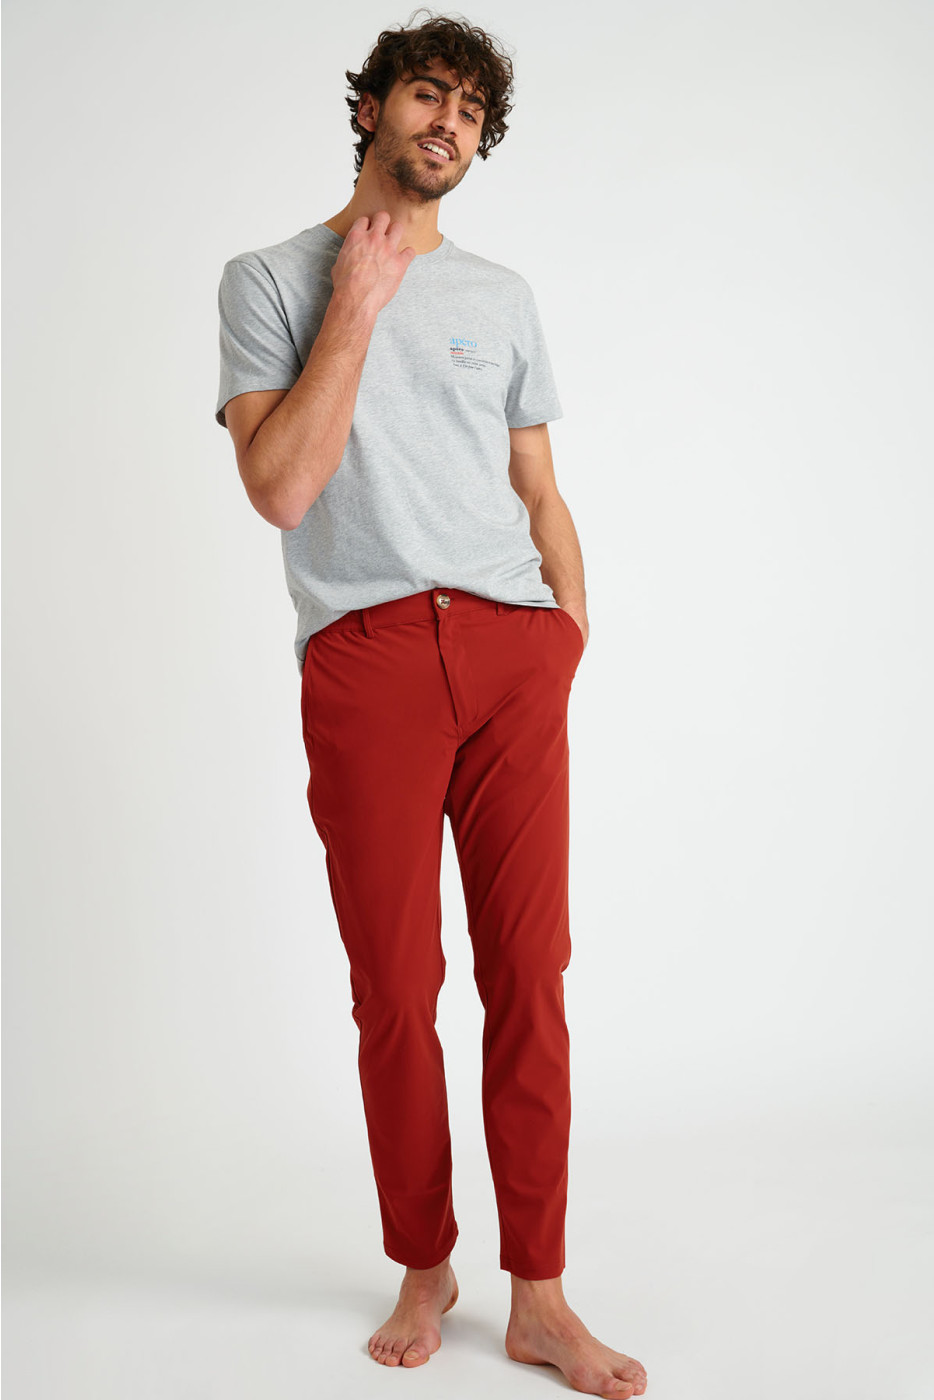 Pantalon stretch rouge SERGE LESCADA